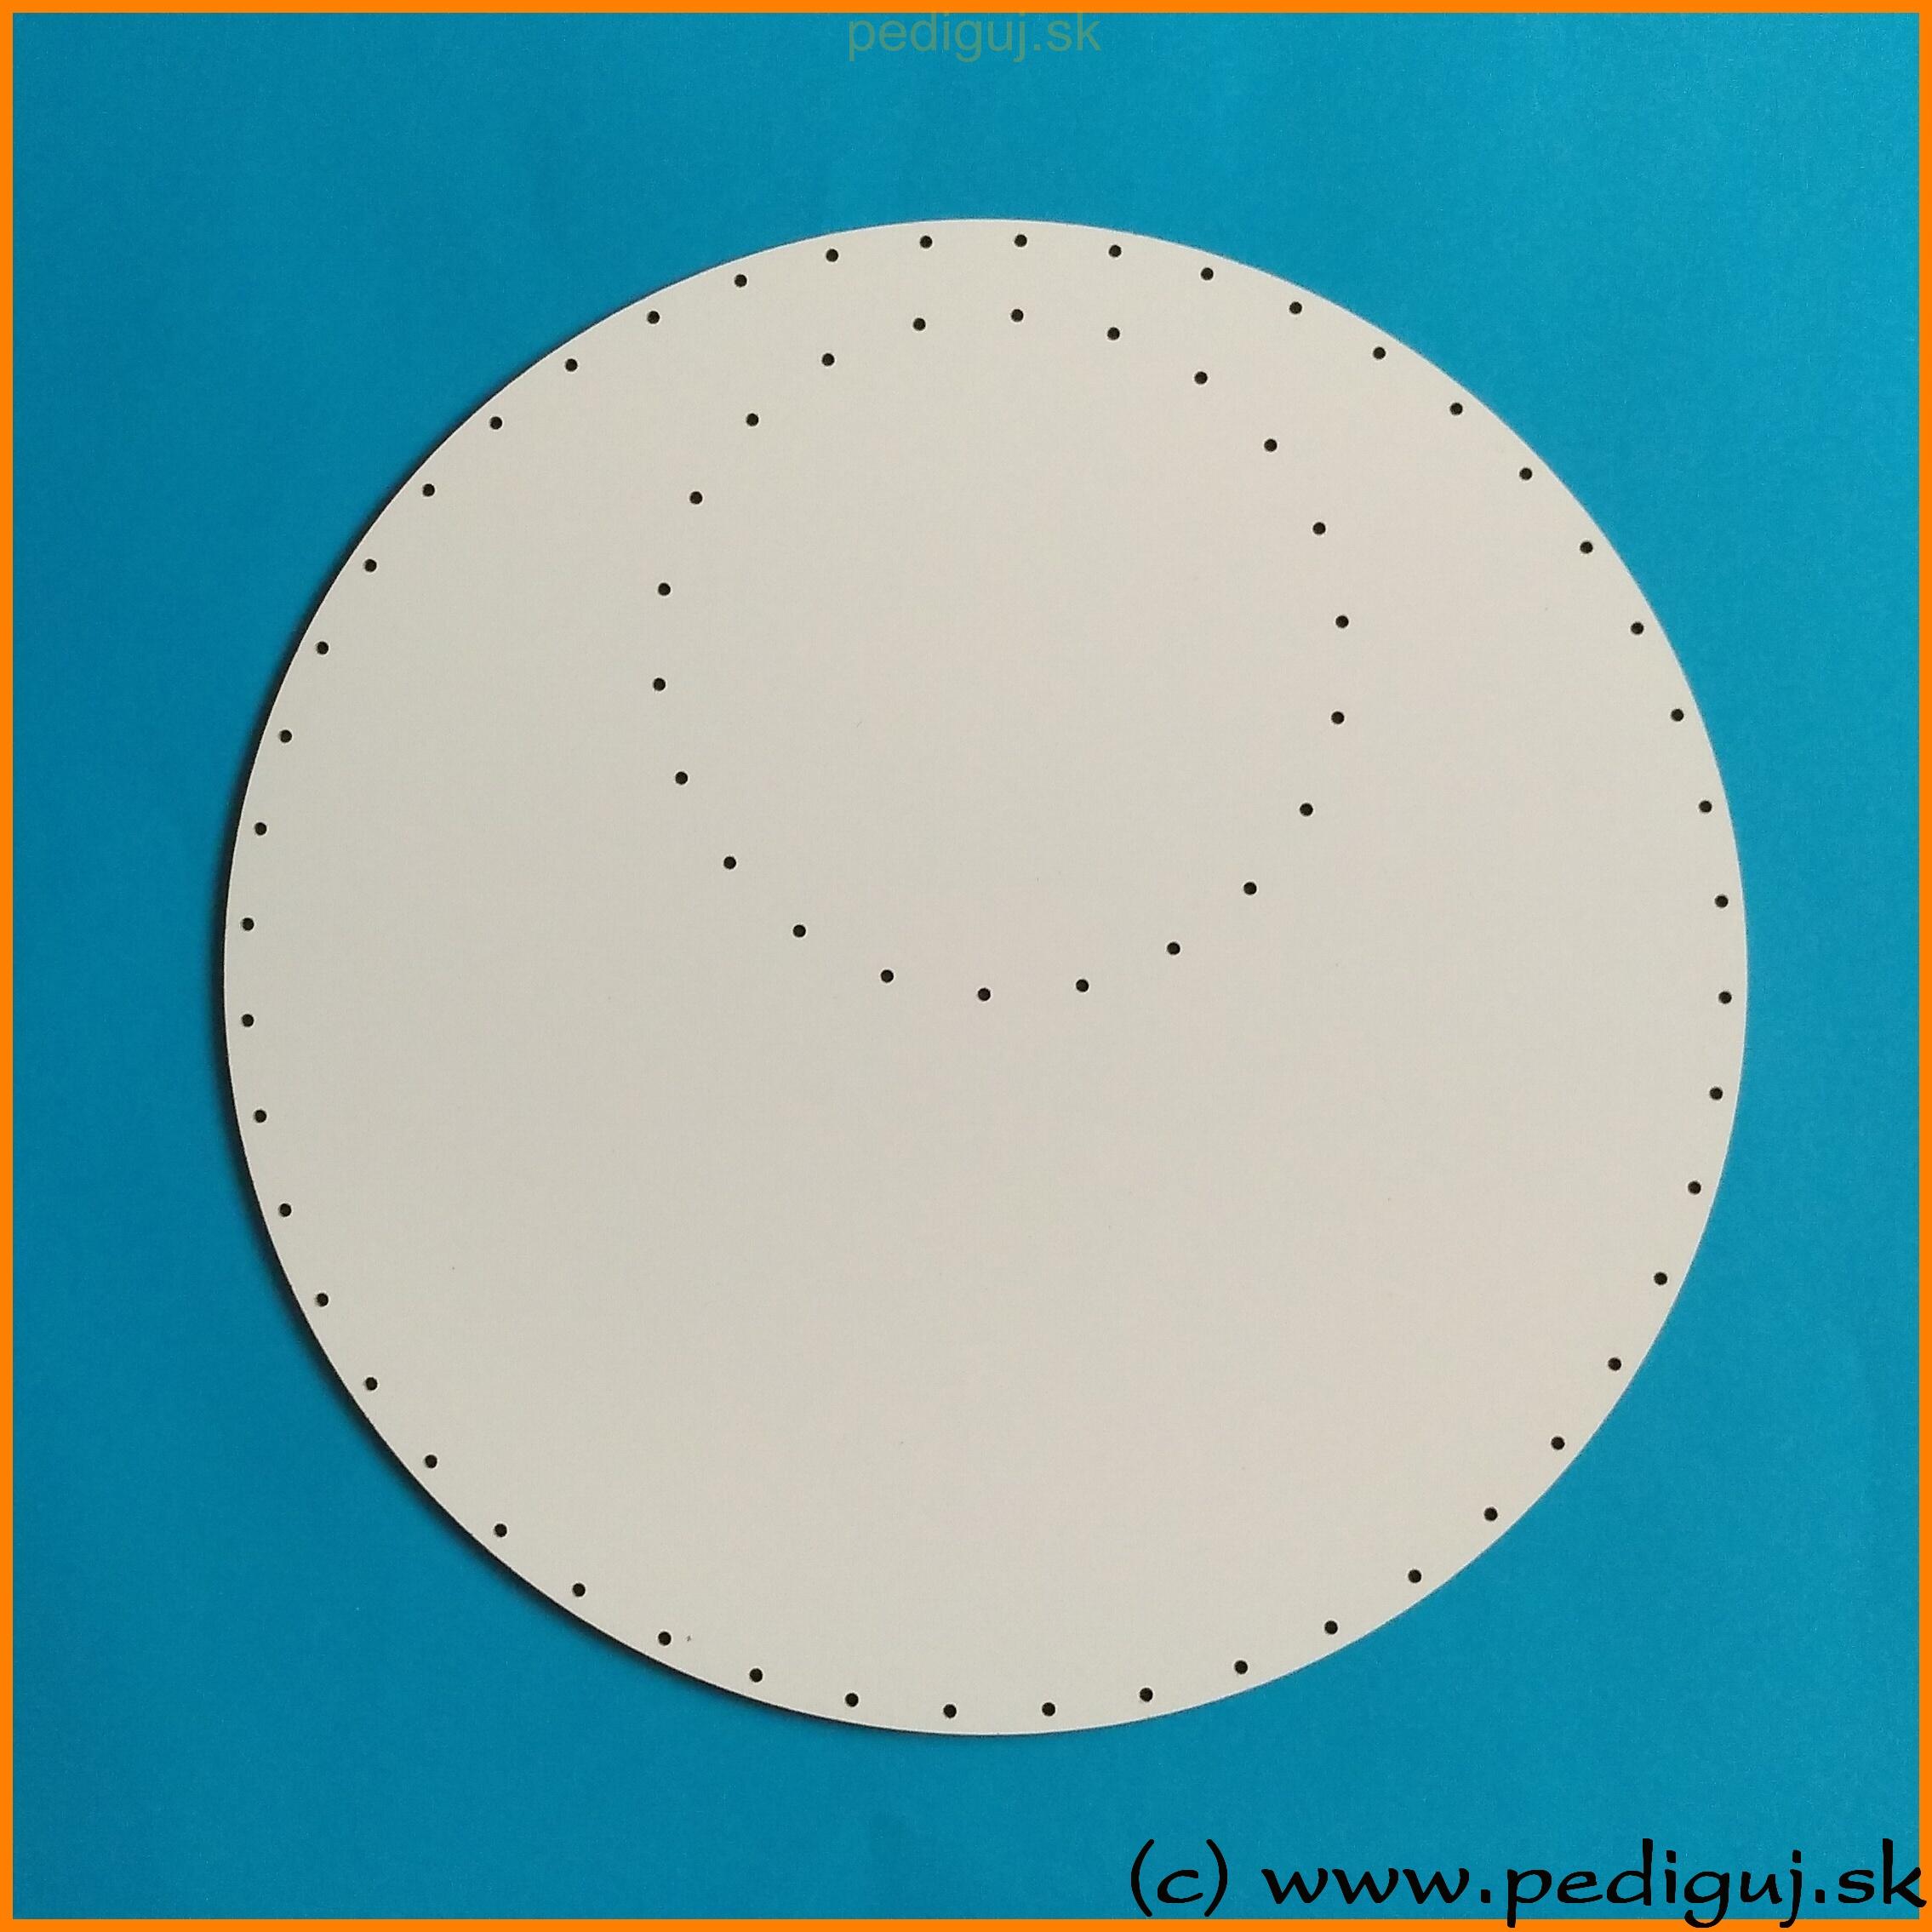 Kruh 35 cm-48 s medzikruhom 1 - 16 cm-22